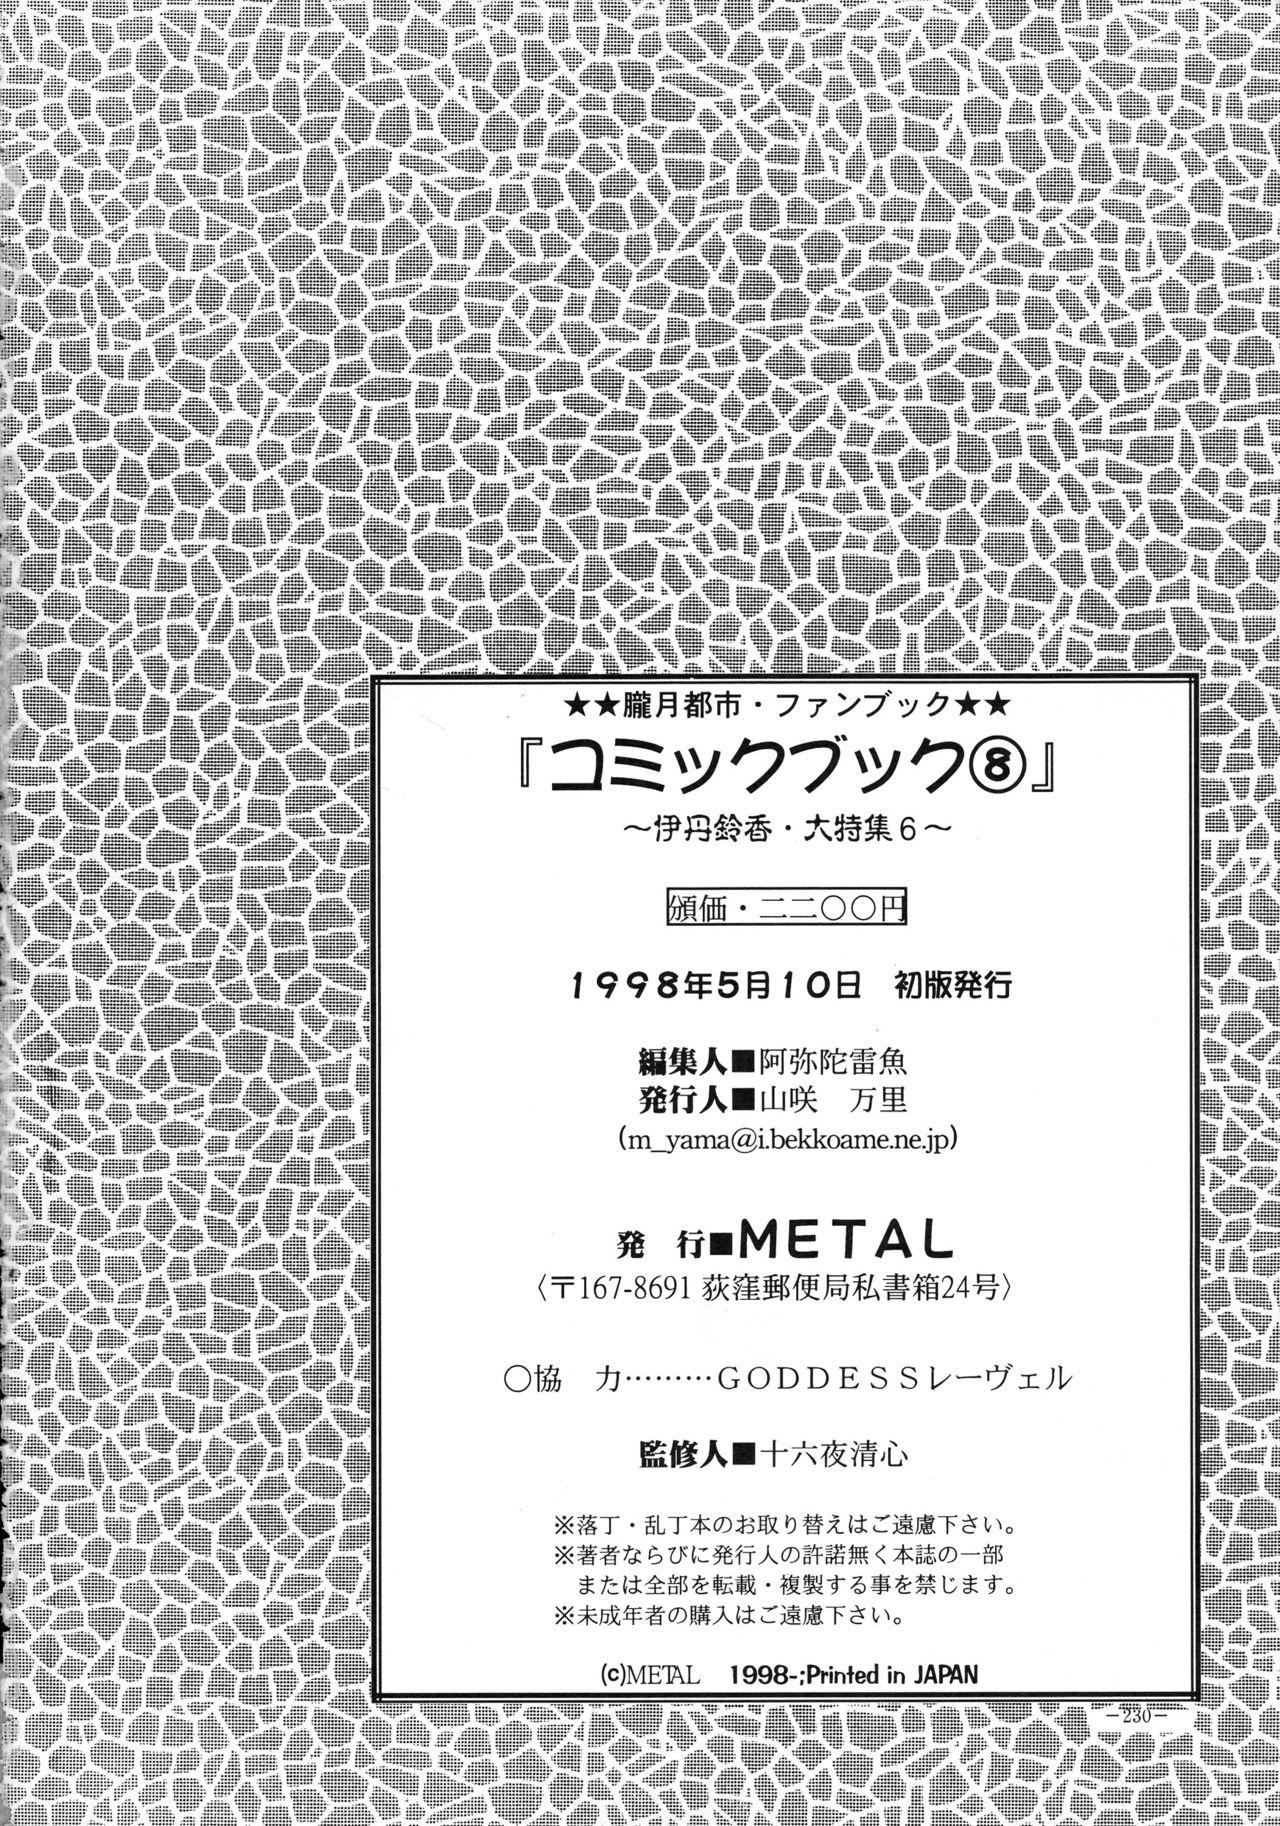 Rougetsu Toshi - Misty Moon Metropolis COMIC BOOK VIII 228